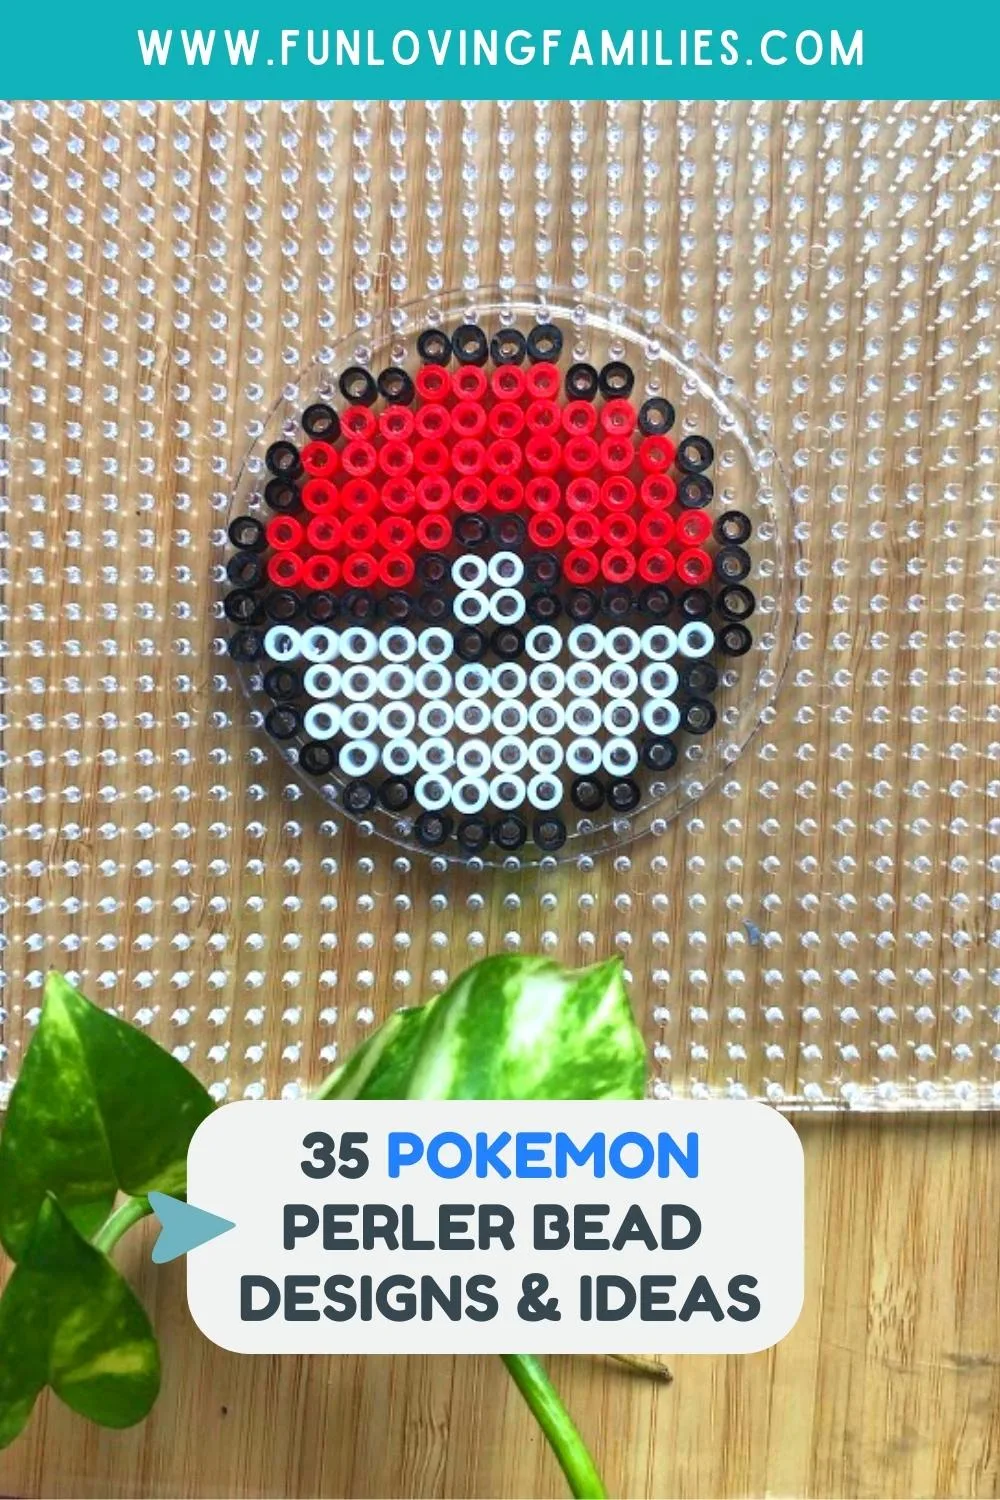 35 Pokémon Perler Bead Patterns, Designs and Ideas pin image